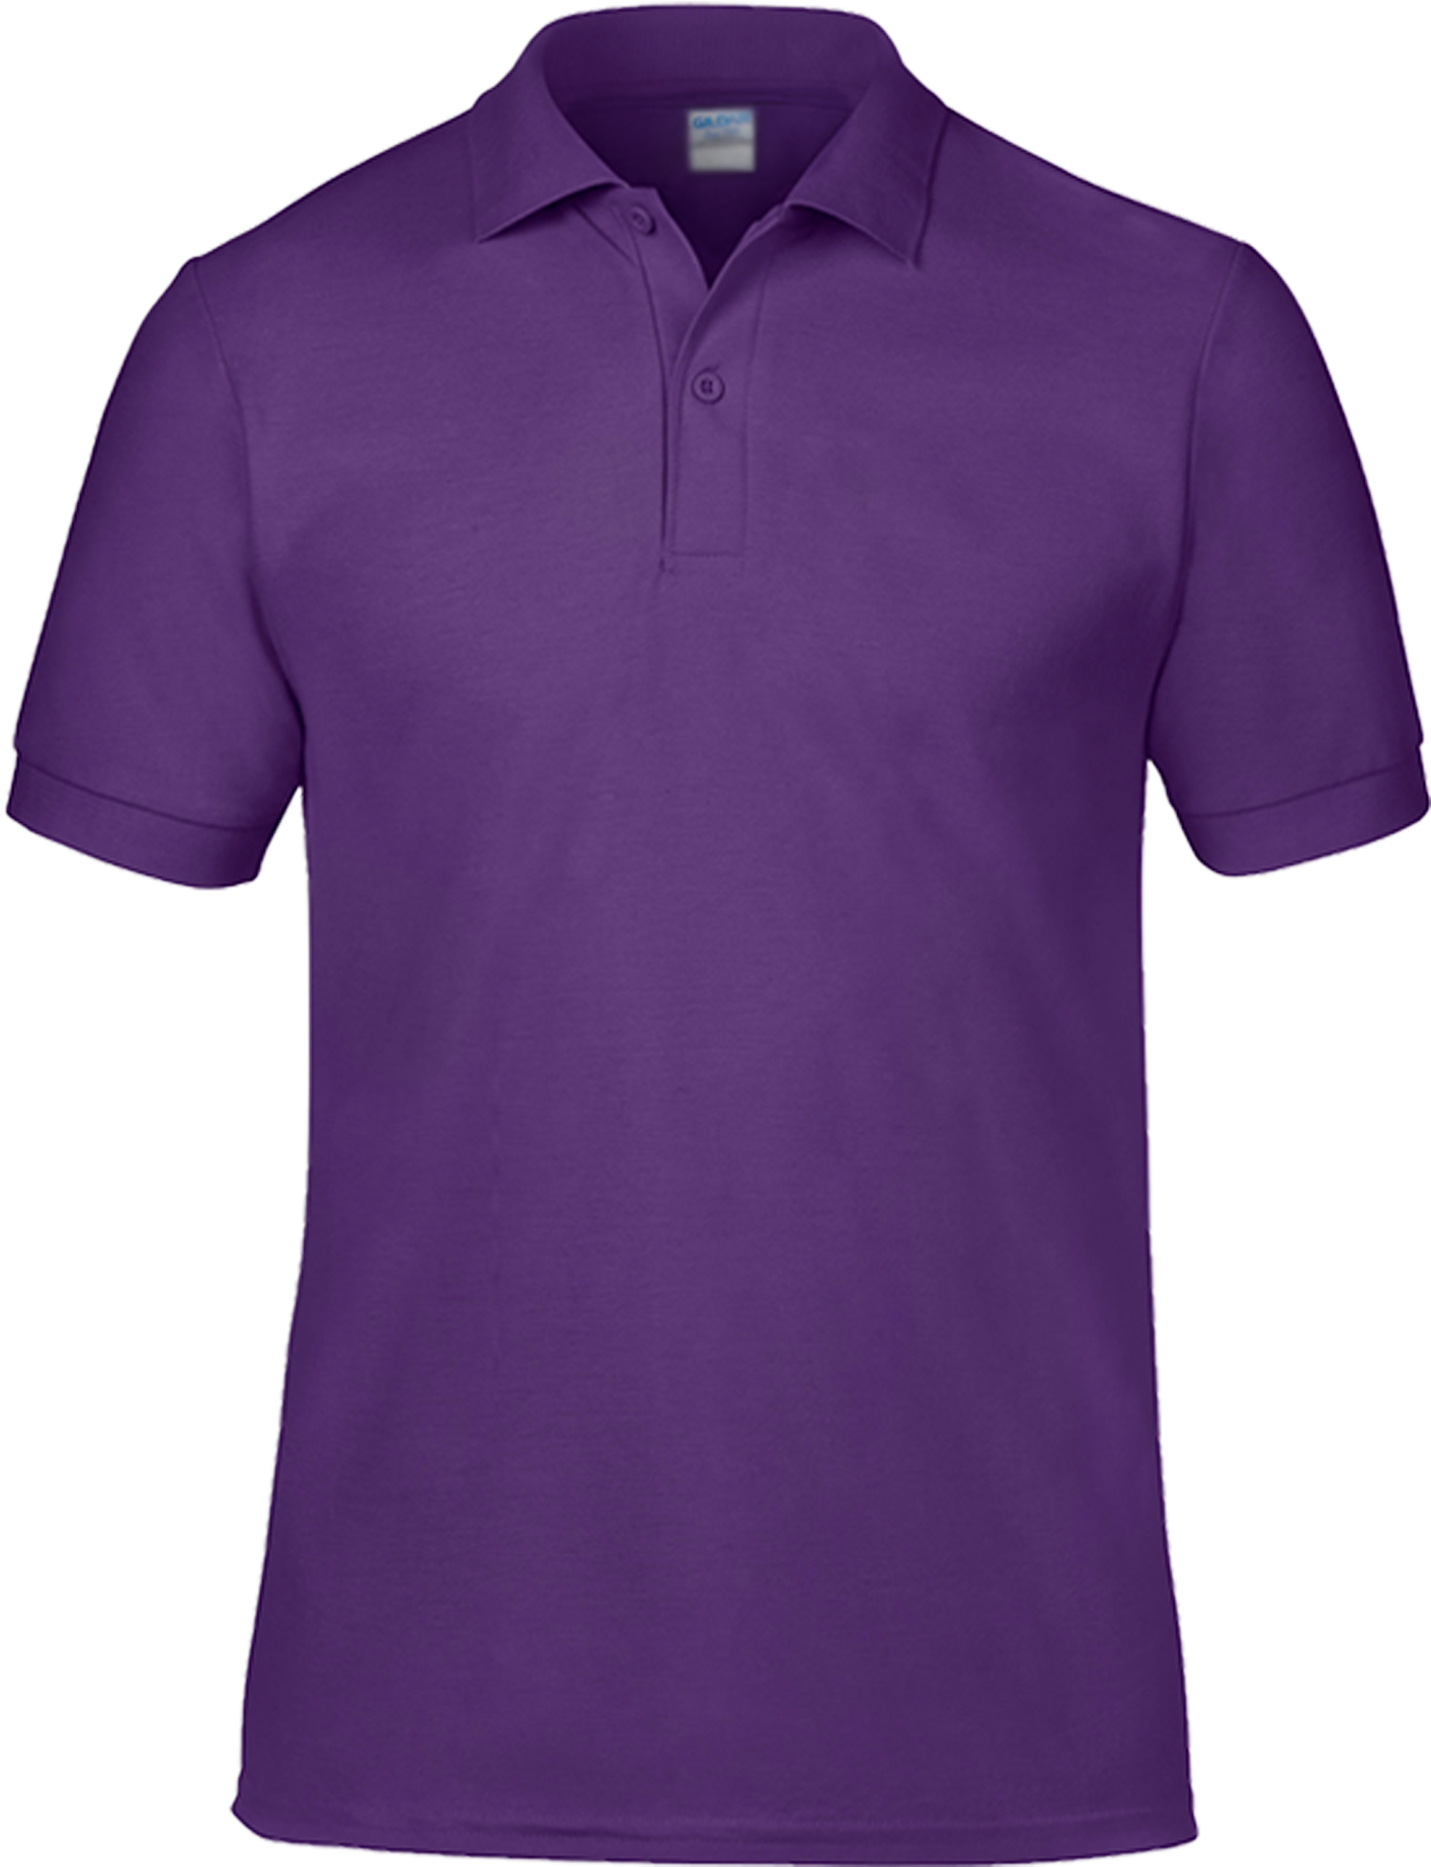 Dark Blue Polo Shirt Png - Polo Shirt (2480x2480), Png Download